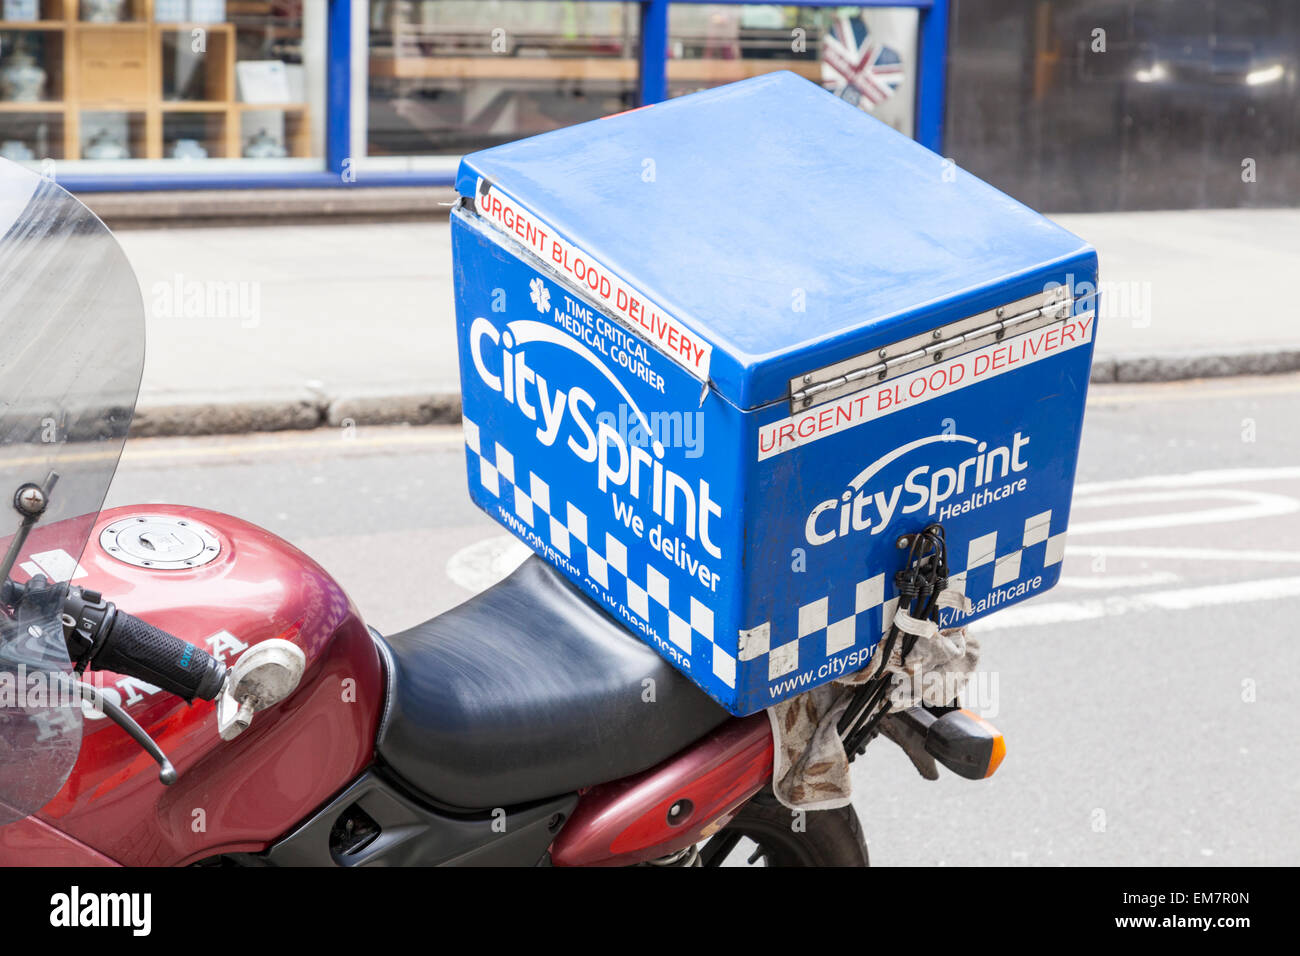 CitySprint Healthcare motorbike used for urgent blood deliveries, London, England, UK Stock Photo